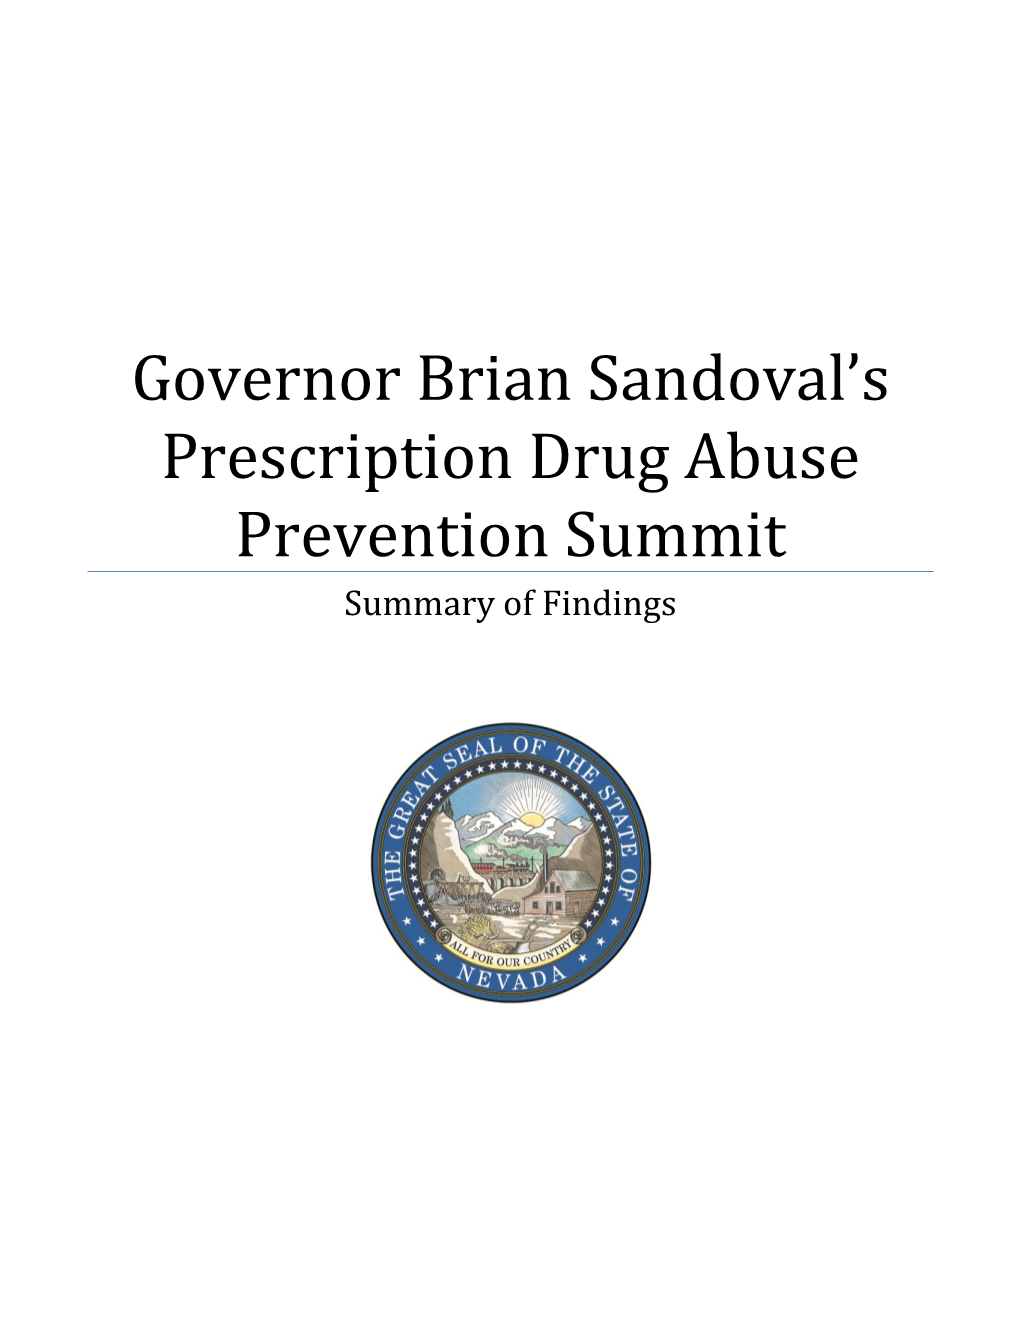 Governor Brian Sandoval's Prescription Drug Abuse Prevention